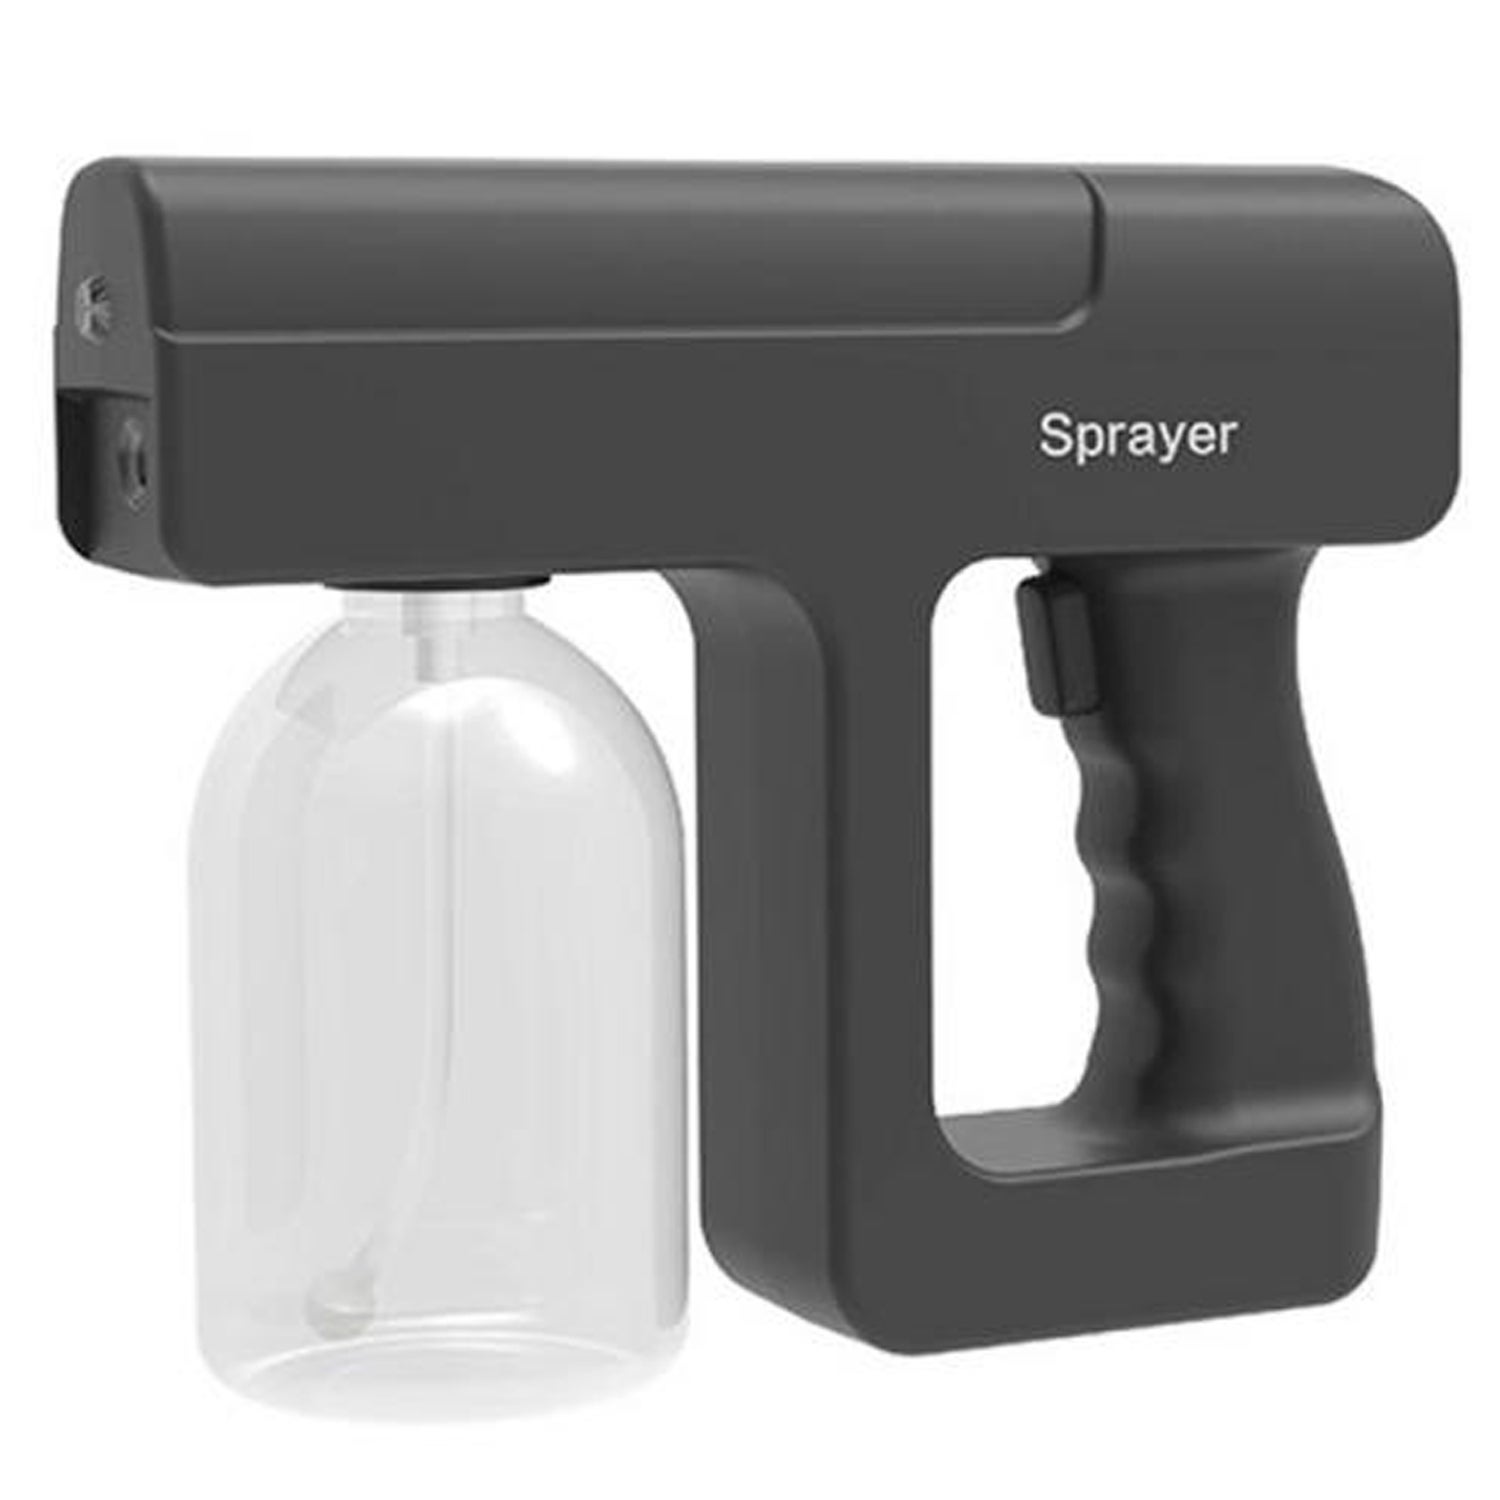 TODO Blue Light Nano Spray Disinfection Gun Air Purifier Sterilizer Portable Rechargeable 300ml - Black